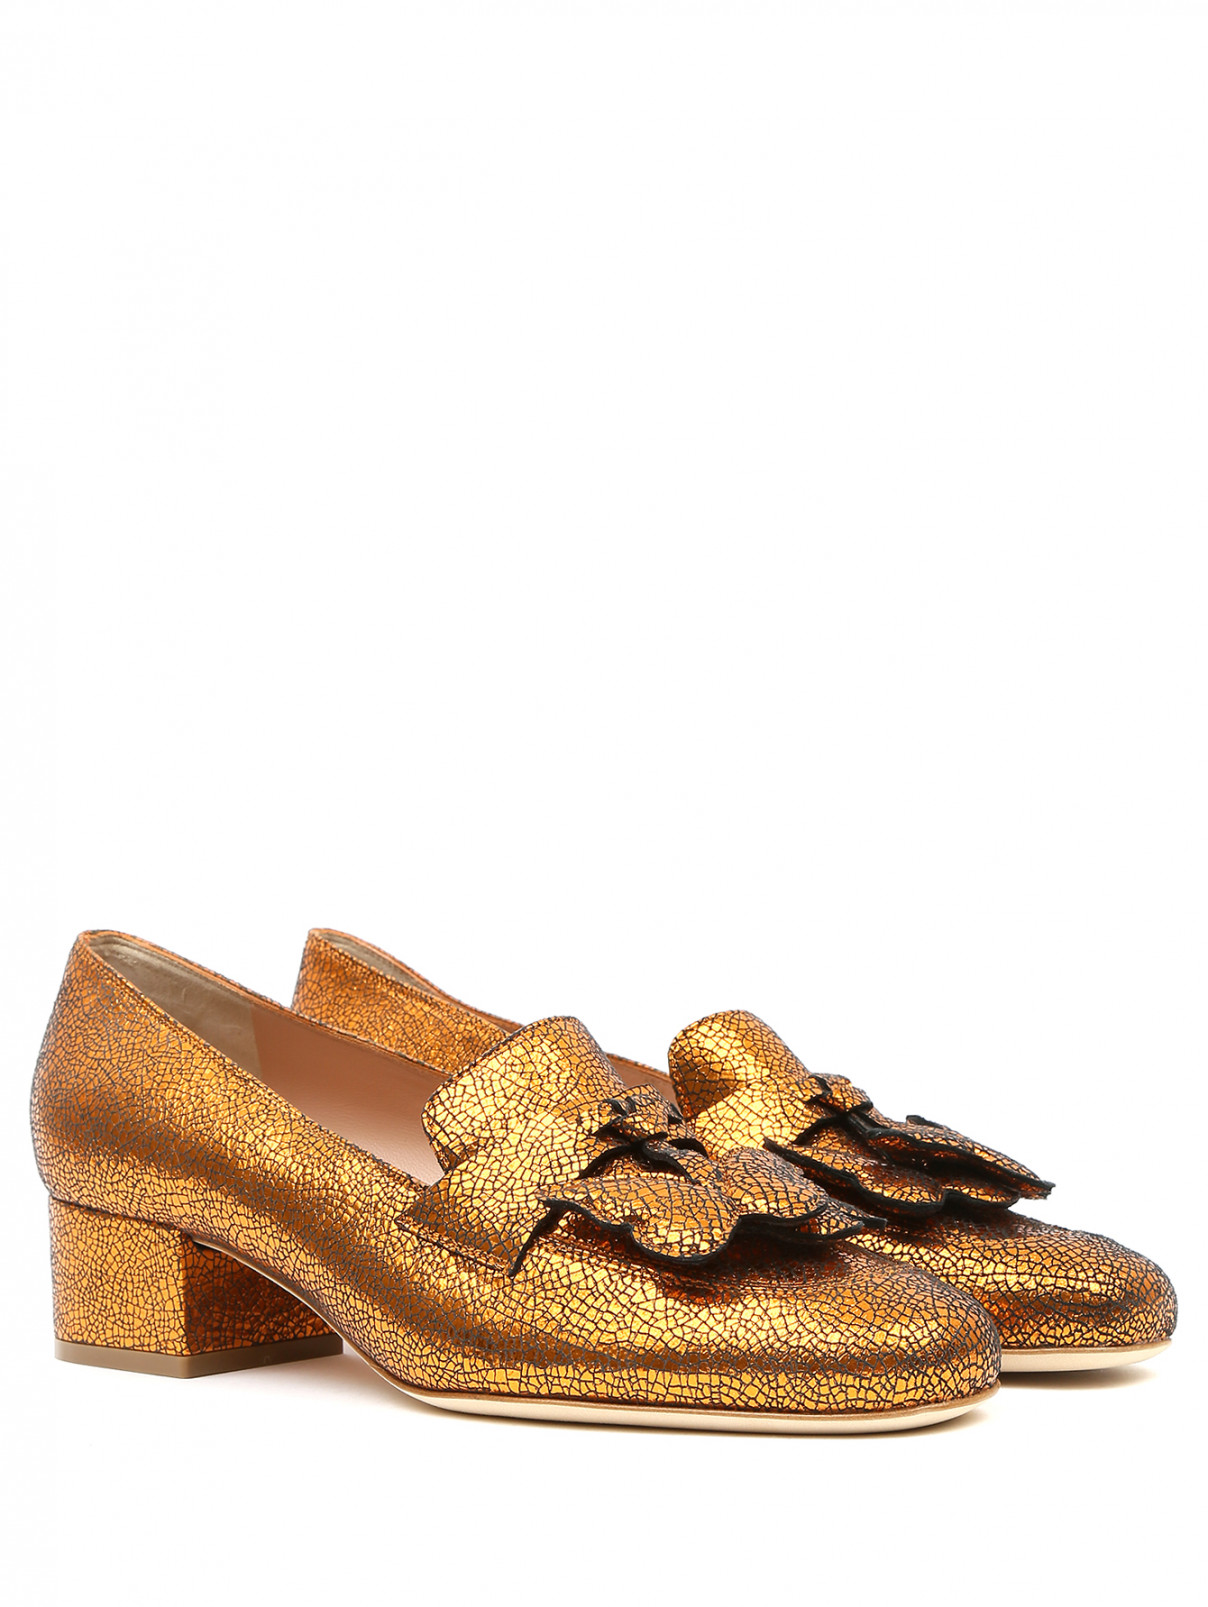 Туфли из фактурной кожи на низком каблуке Alberta Ferretti  –  Общий вид  – Цвет:  Металлик